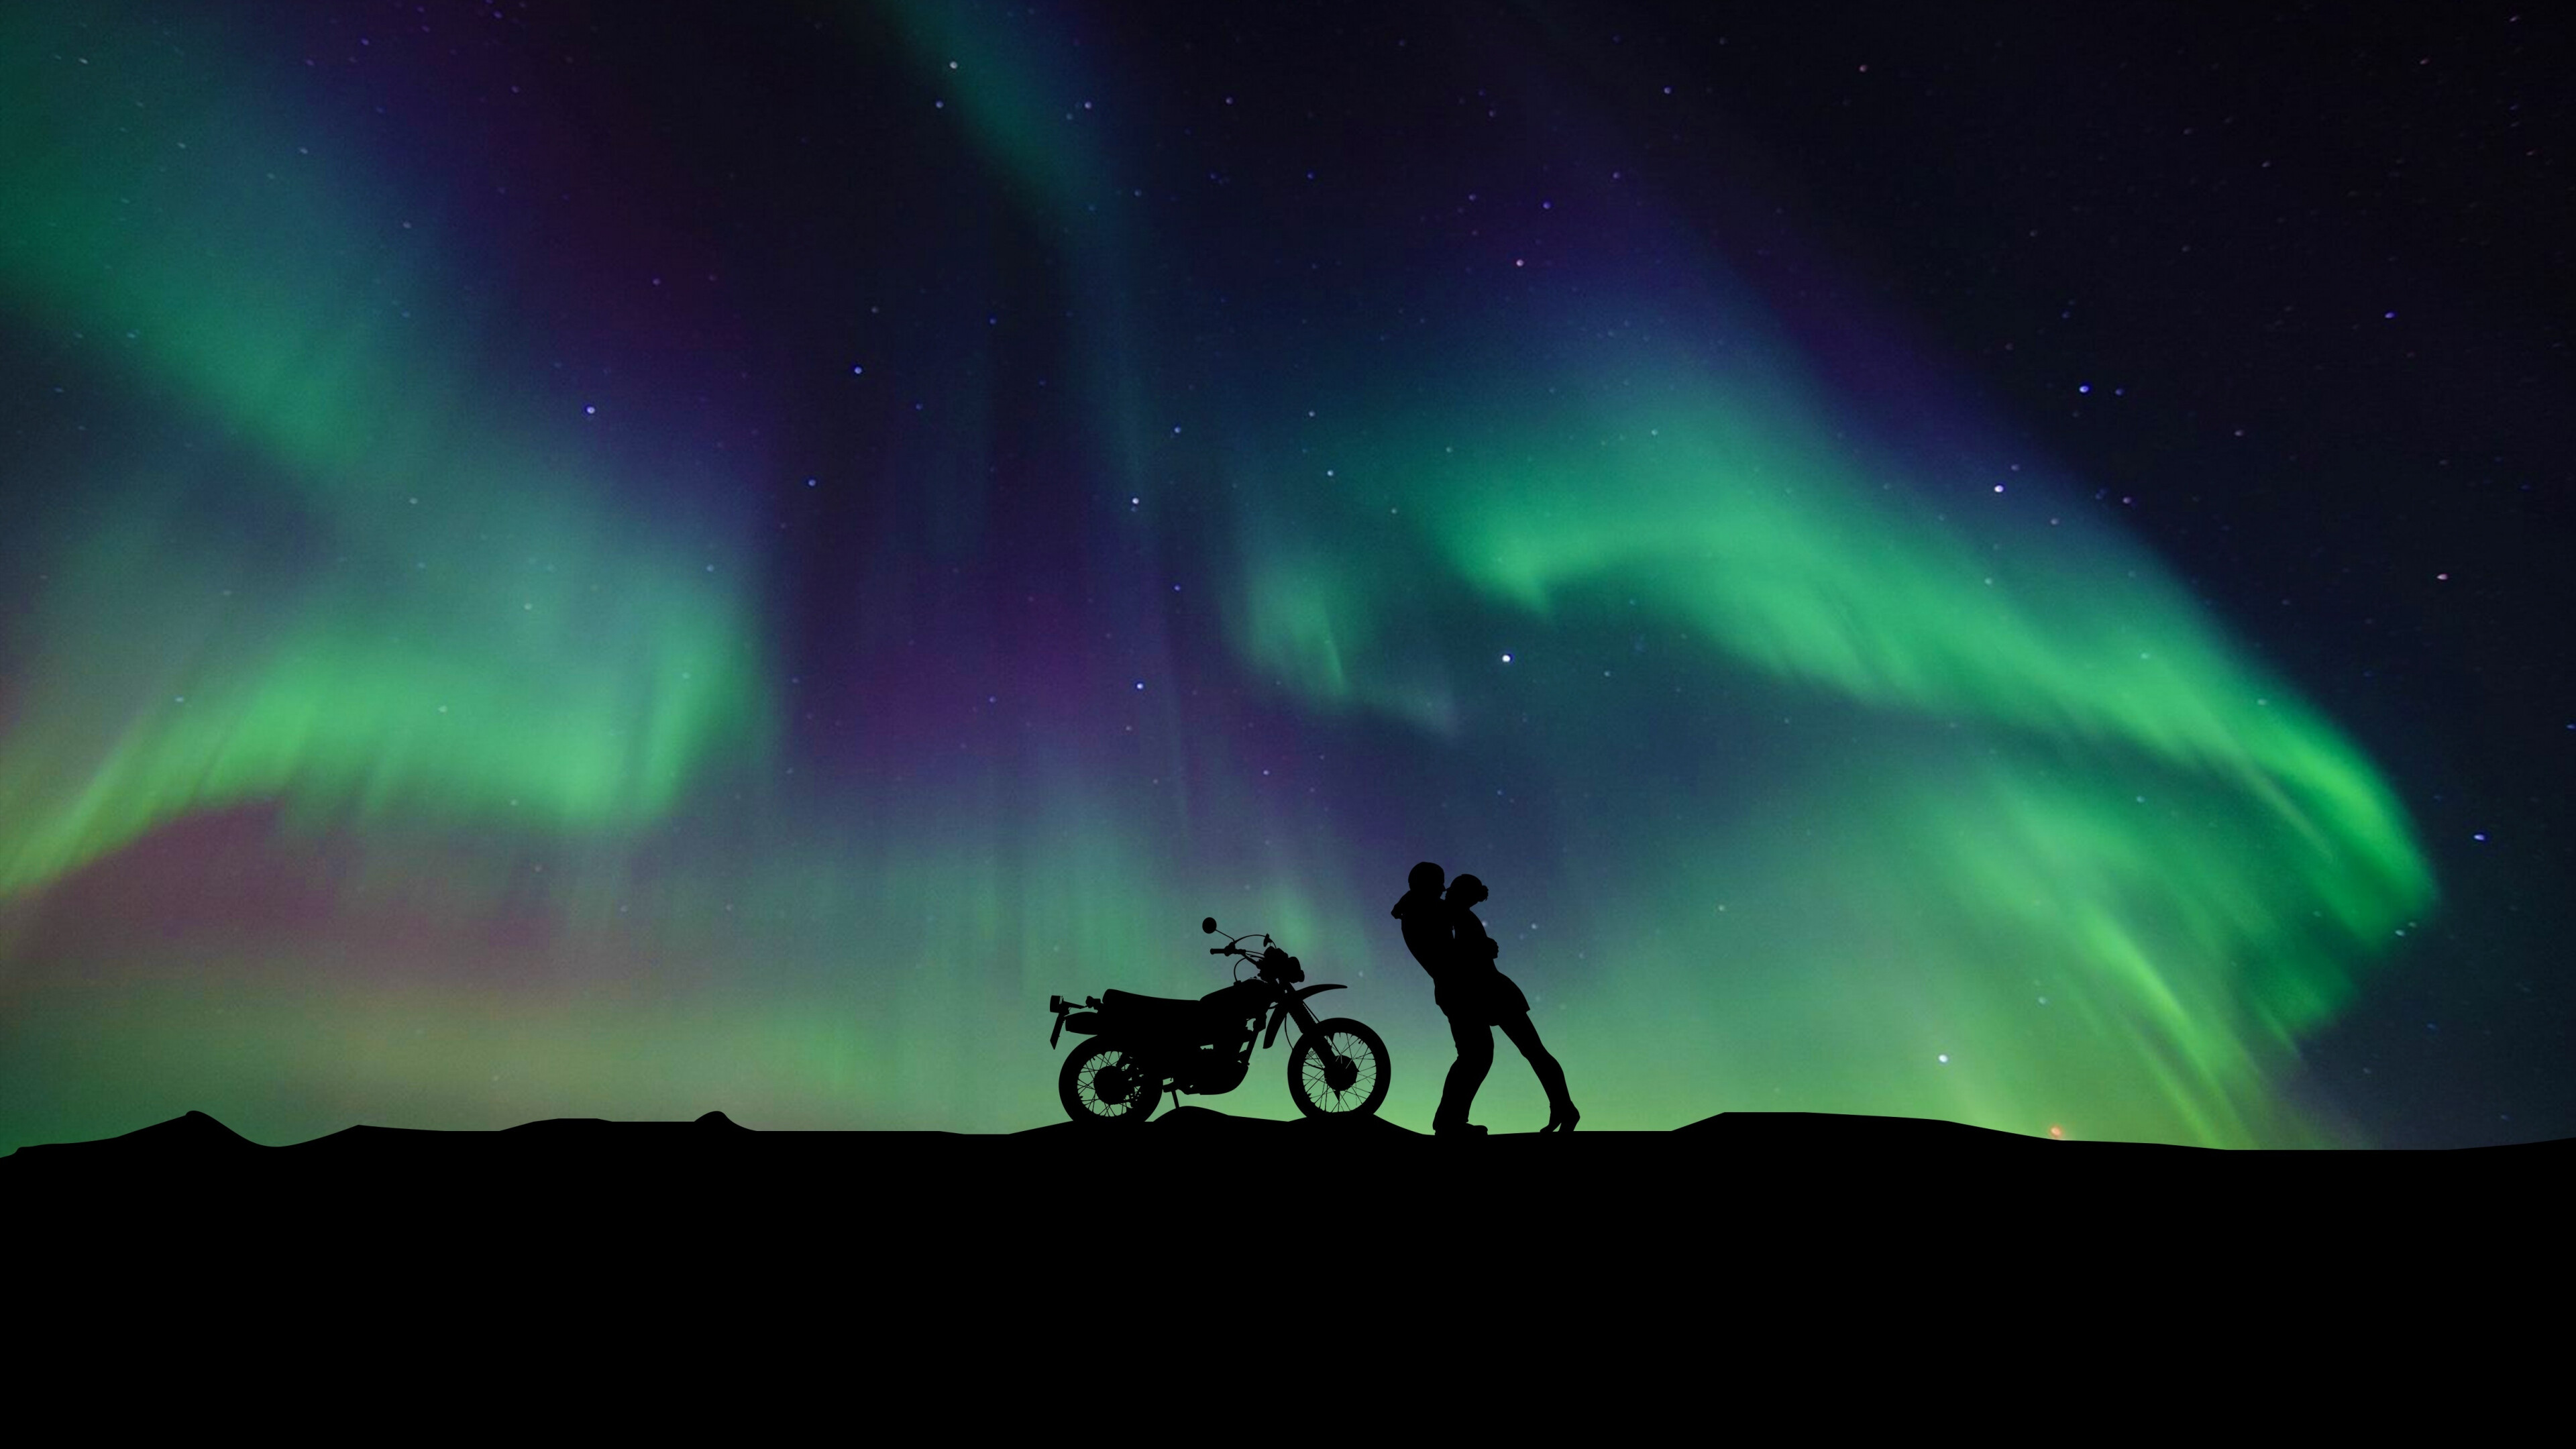 Couple with Aurora Borealis, Motorcycle hug, UHD wallpaper, Breathtaking moment, 3840x2160 4K Desktop